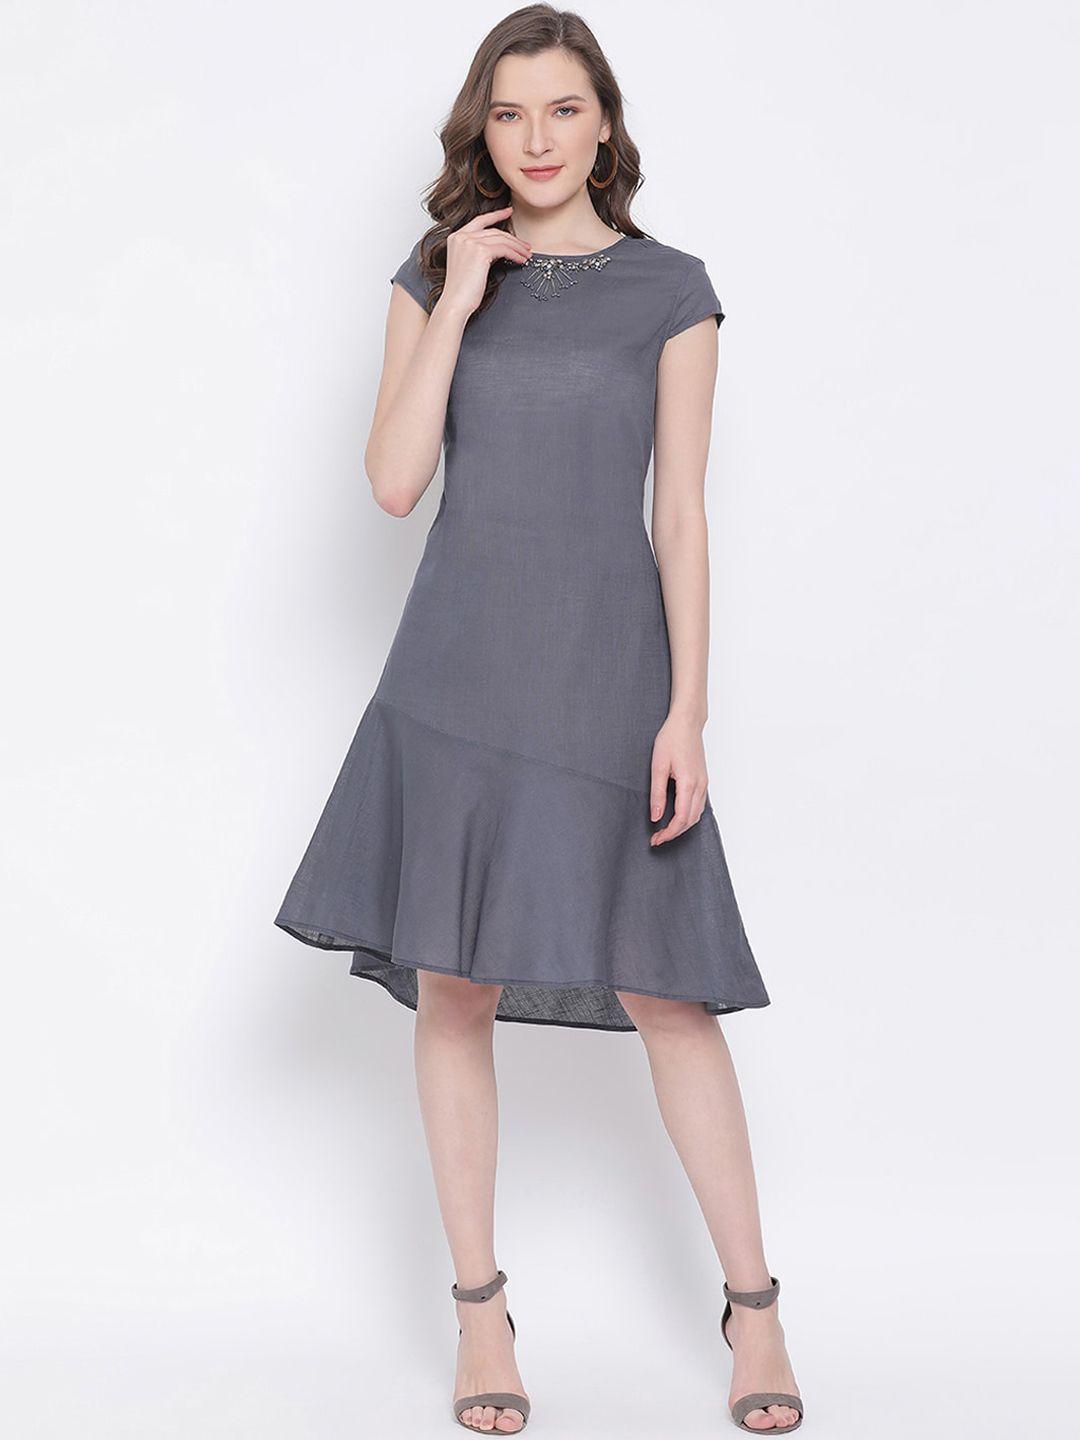 ly2-women-grey-embellished-a-line-dress